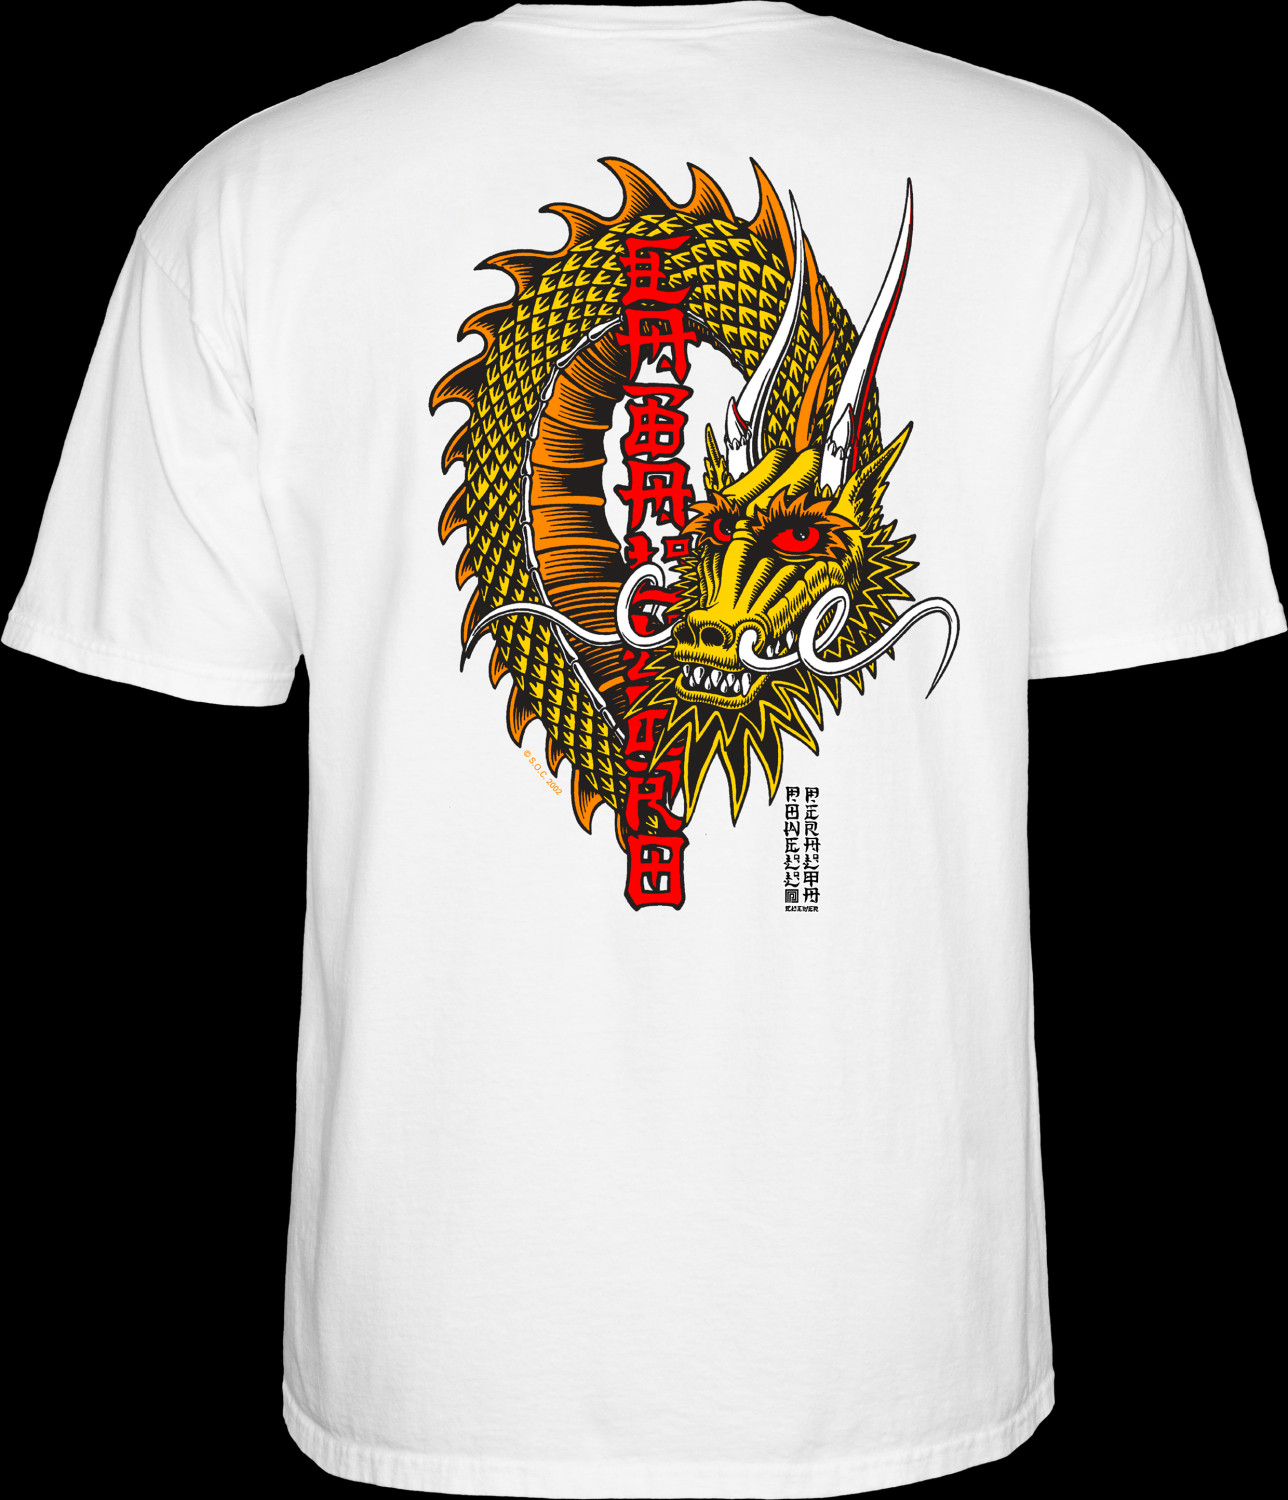 Powell Peralta Steve Caballero Ban This Dragon T-Shirt Photo #1 - Photo ...